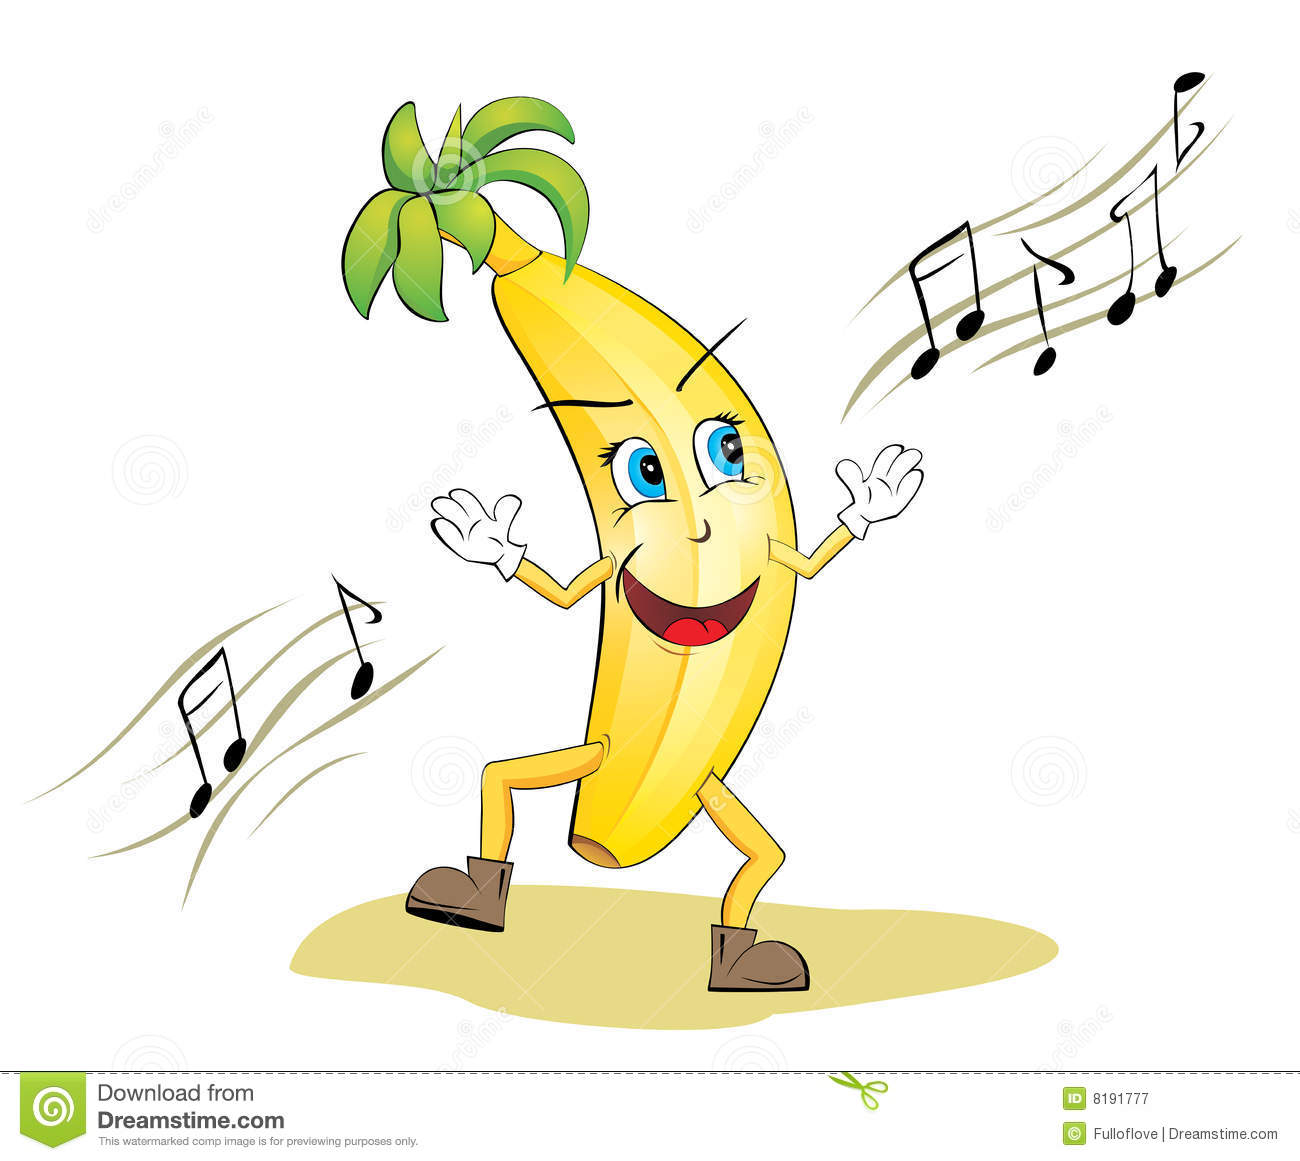  explore wallpaperswala com download clips very funny banana couple jpg